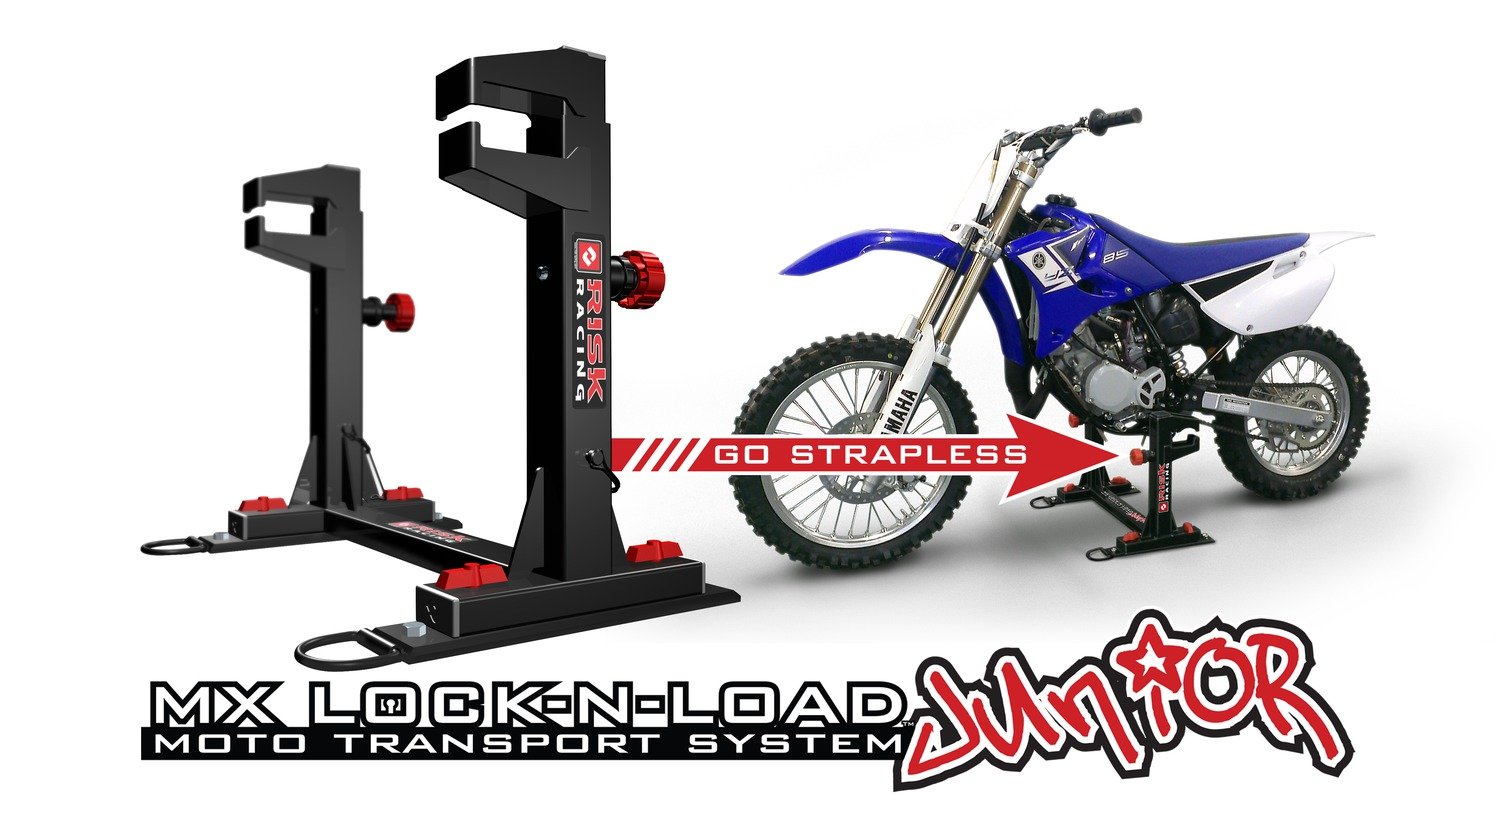 Obrázek produktu transportní systém pro MX motocykly Lock-N-Load JUNIOR, Risk Racing 00204